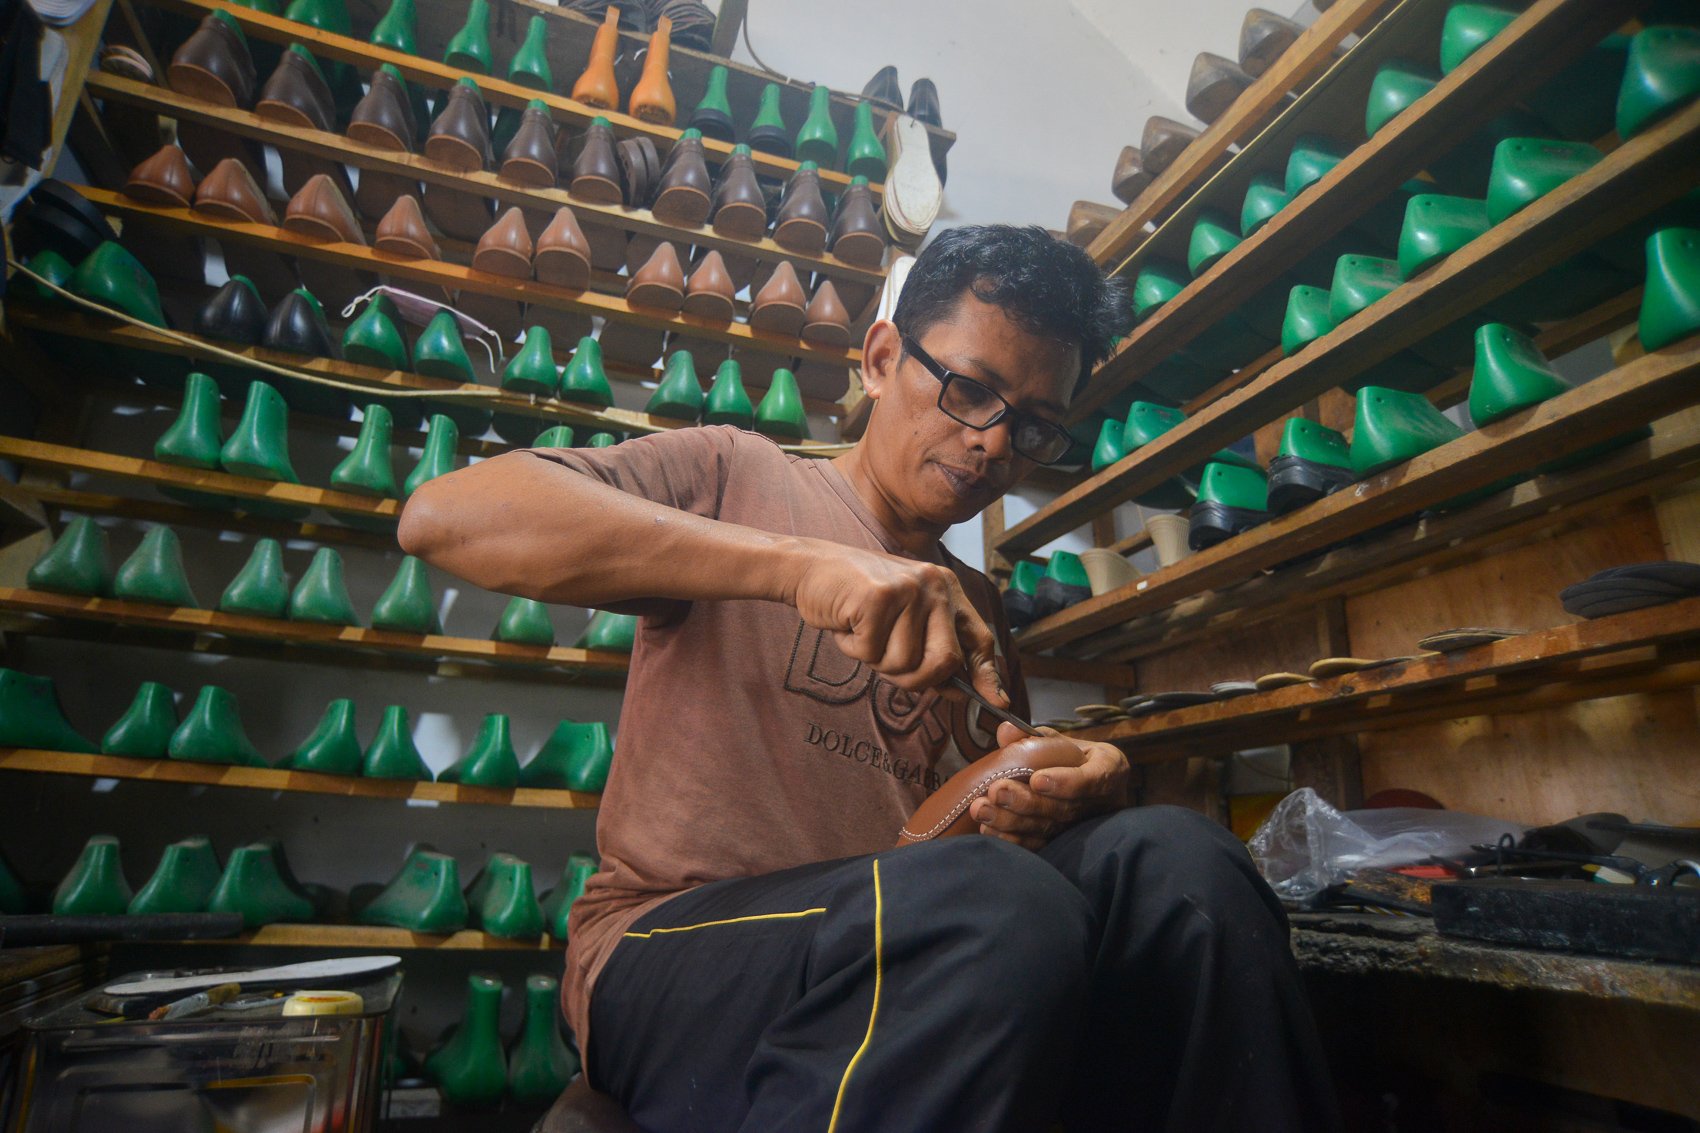 Pekerja menyelesaikan peroses pembuatan sepatu kulit di rumah produksi Minang Kayo, Padang Panjang, Sumatera Barat.